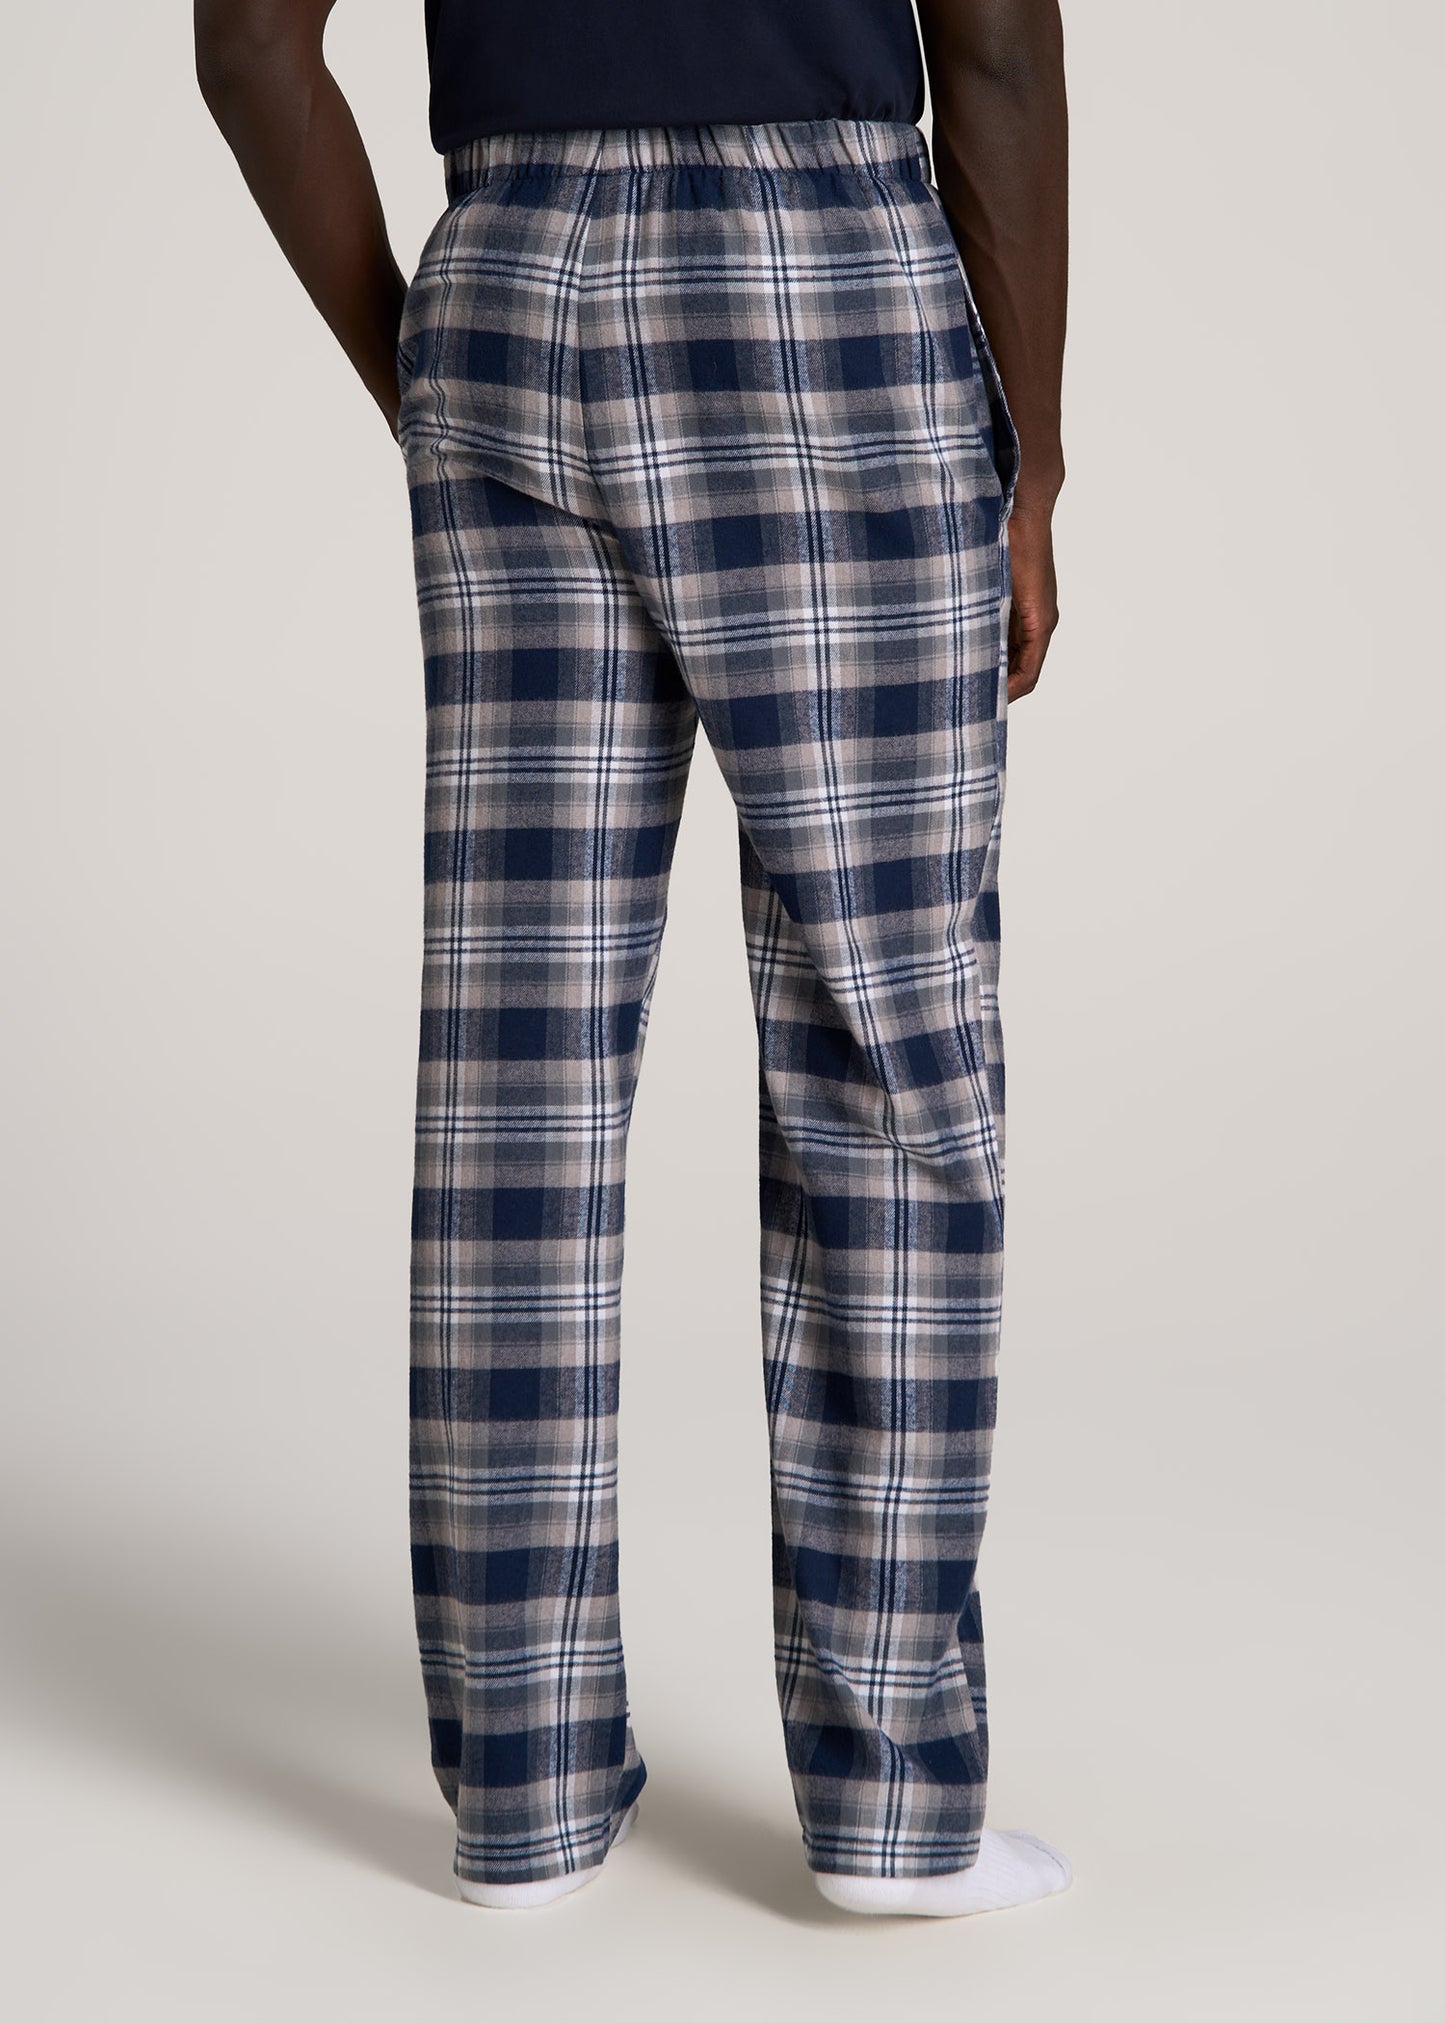 American Tall Men Flannel Pajamas Navy Grey Plaid